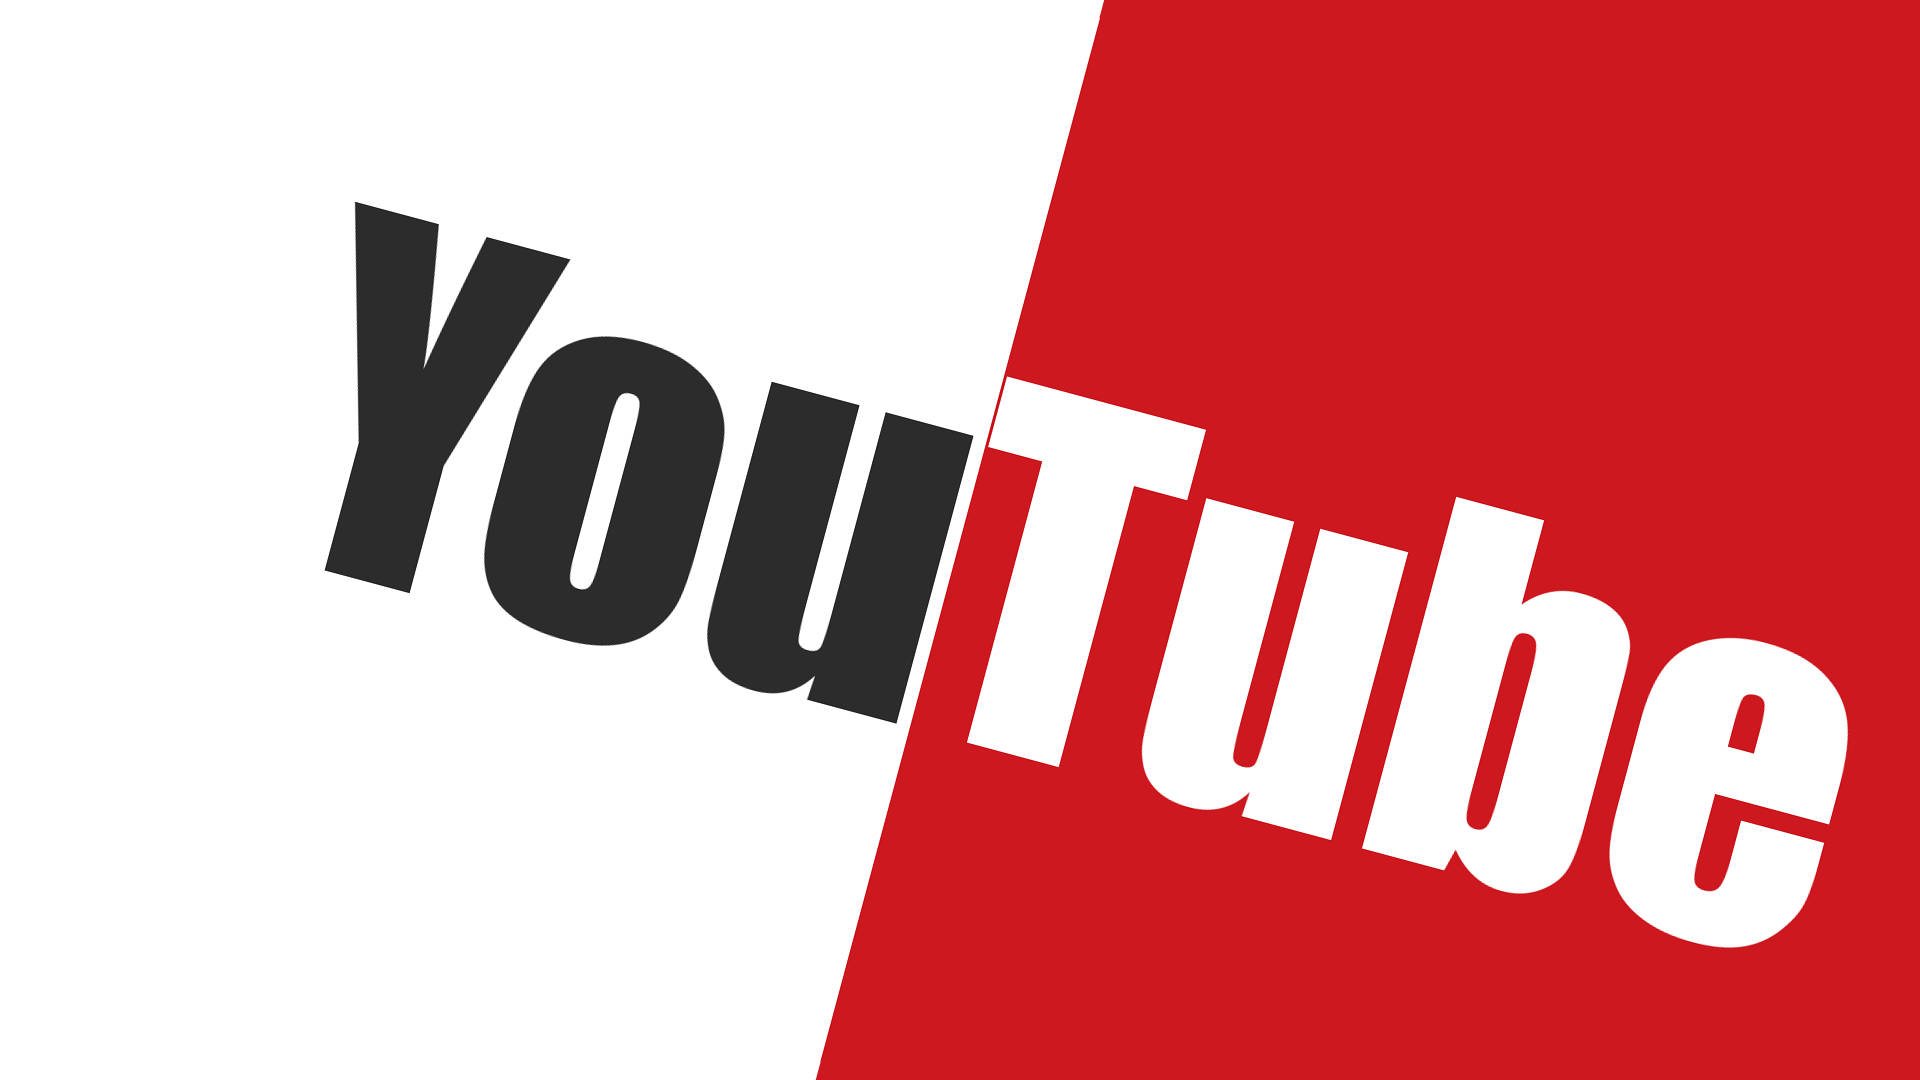 Logode Youtube Sobre Fondo Blanco Y Rojo Fondo de pantalla